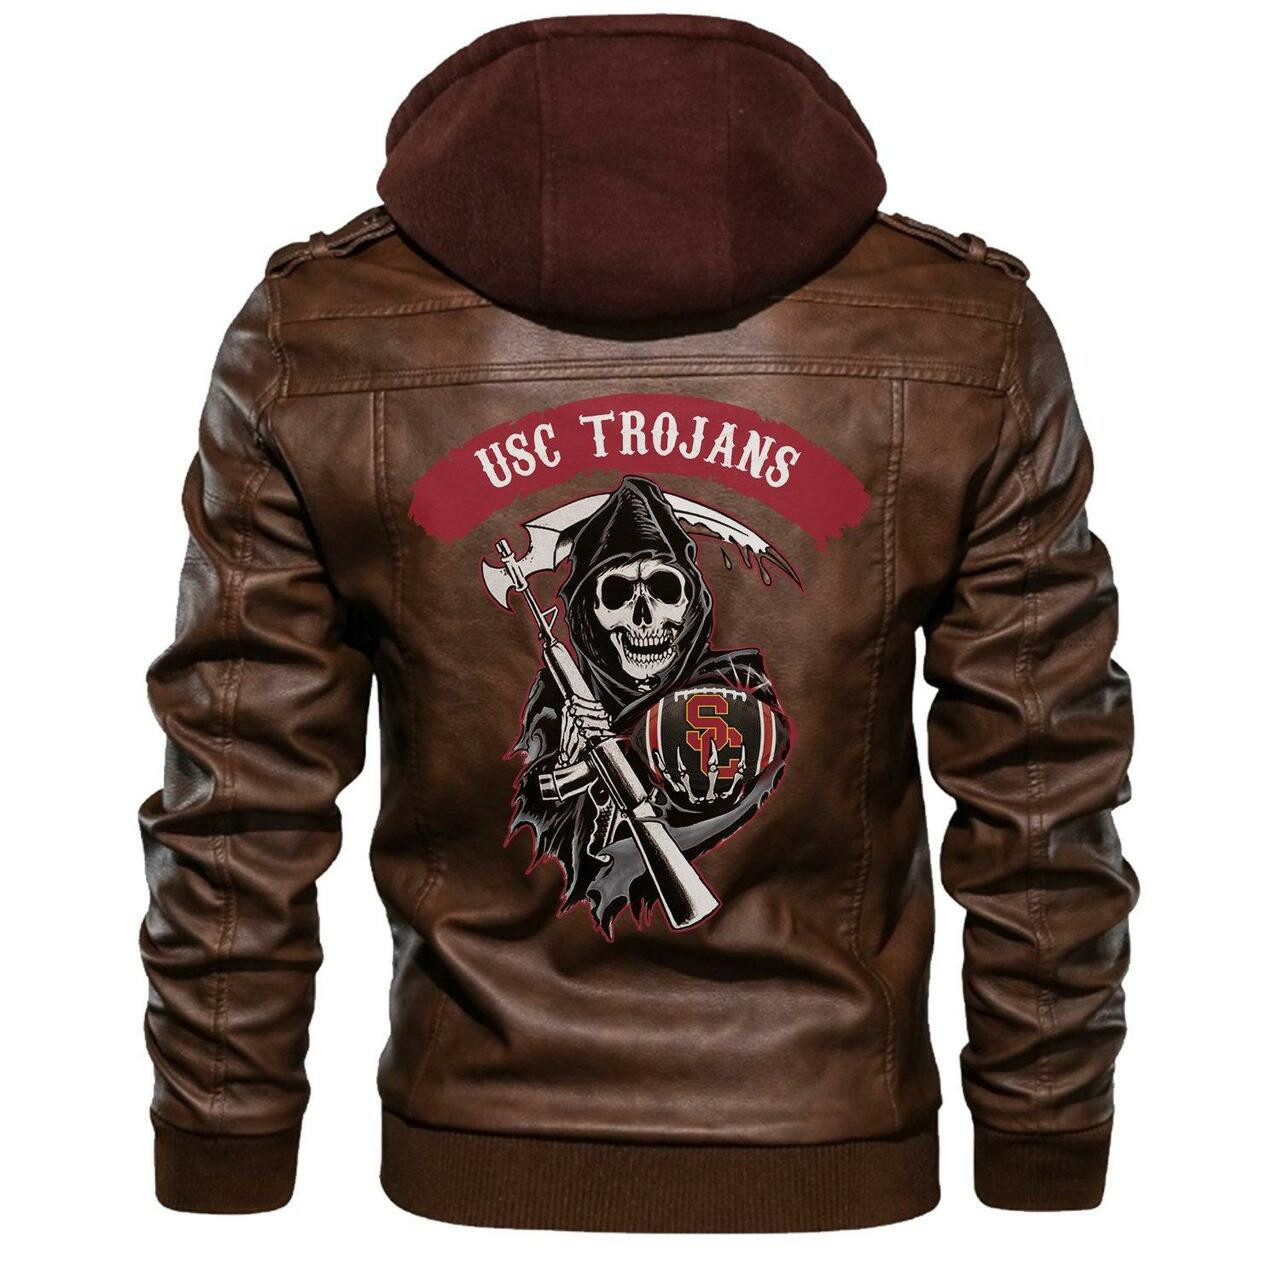 Top leather jacket Sells Best on Techcomshop 11